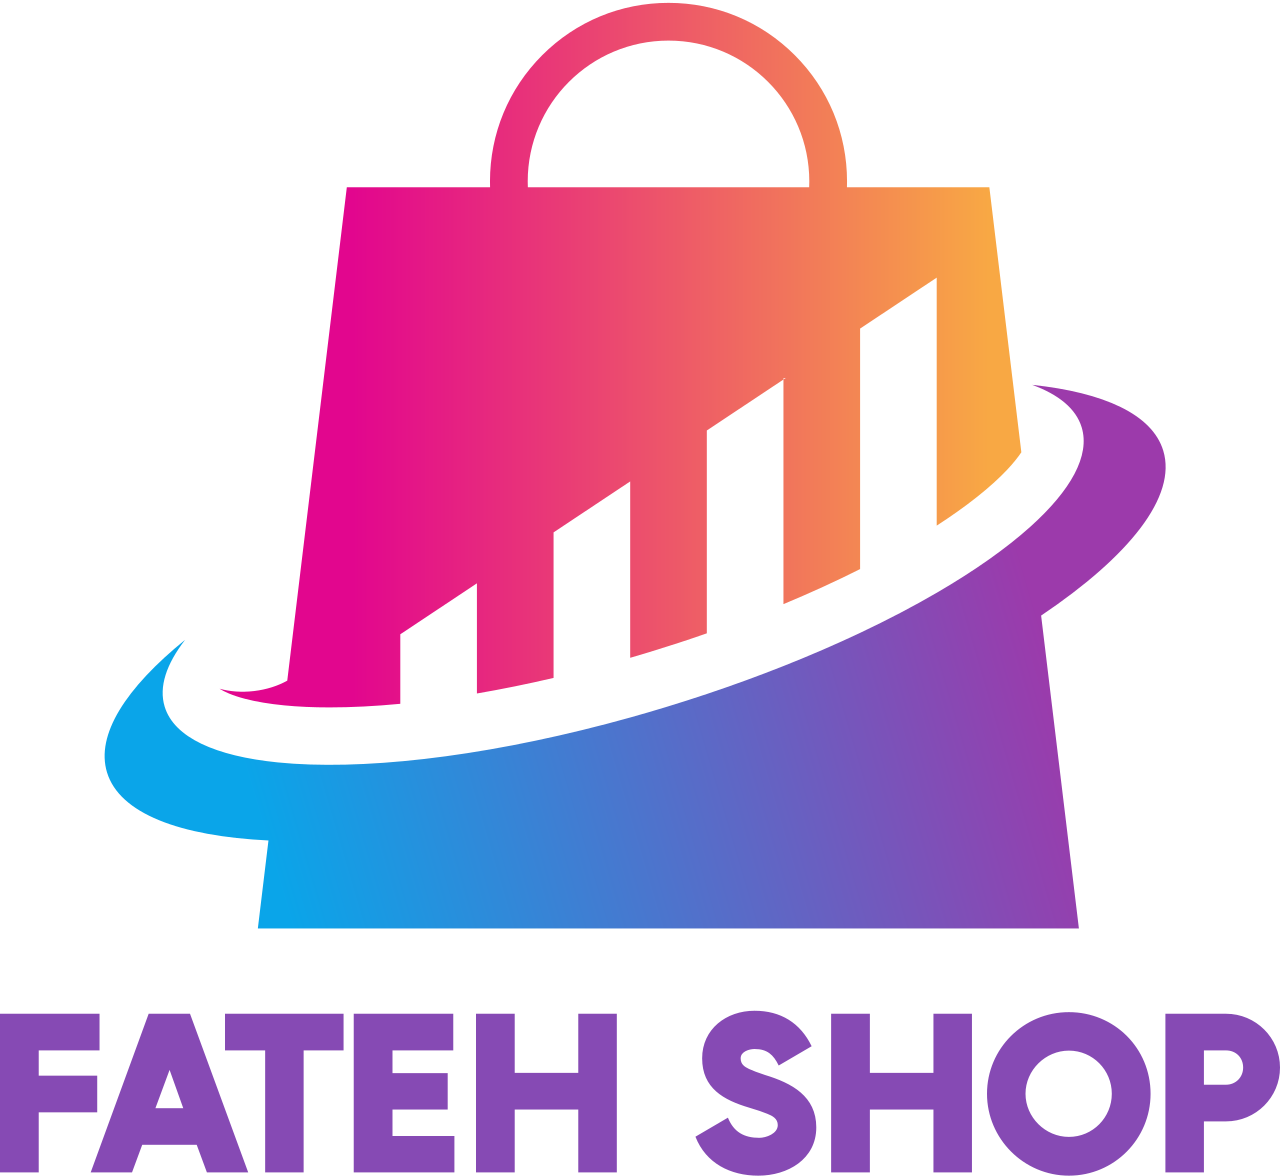 Fateh shop's logo